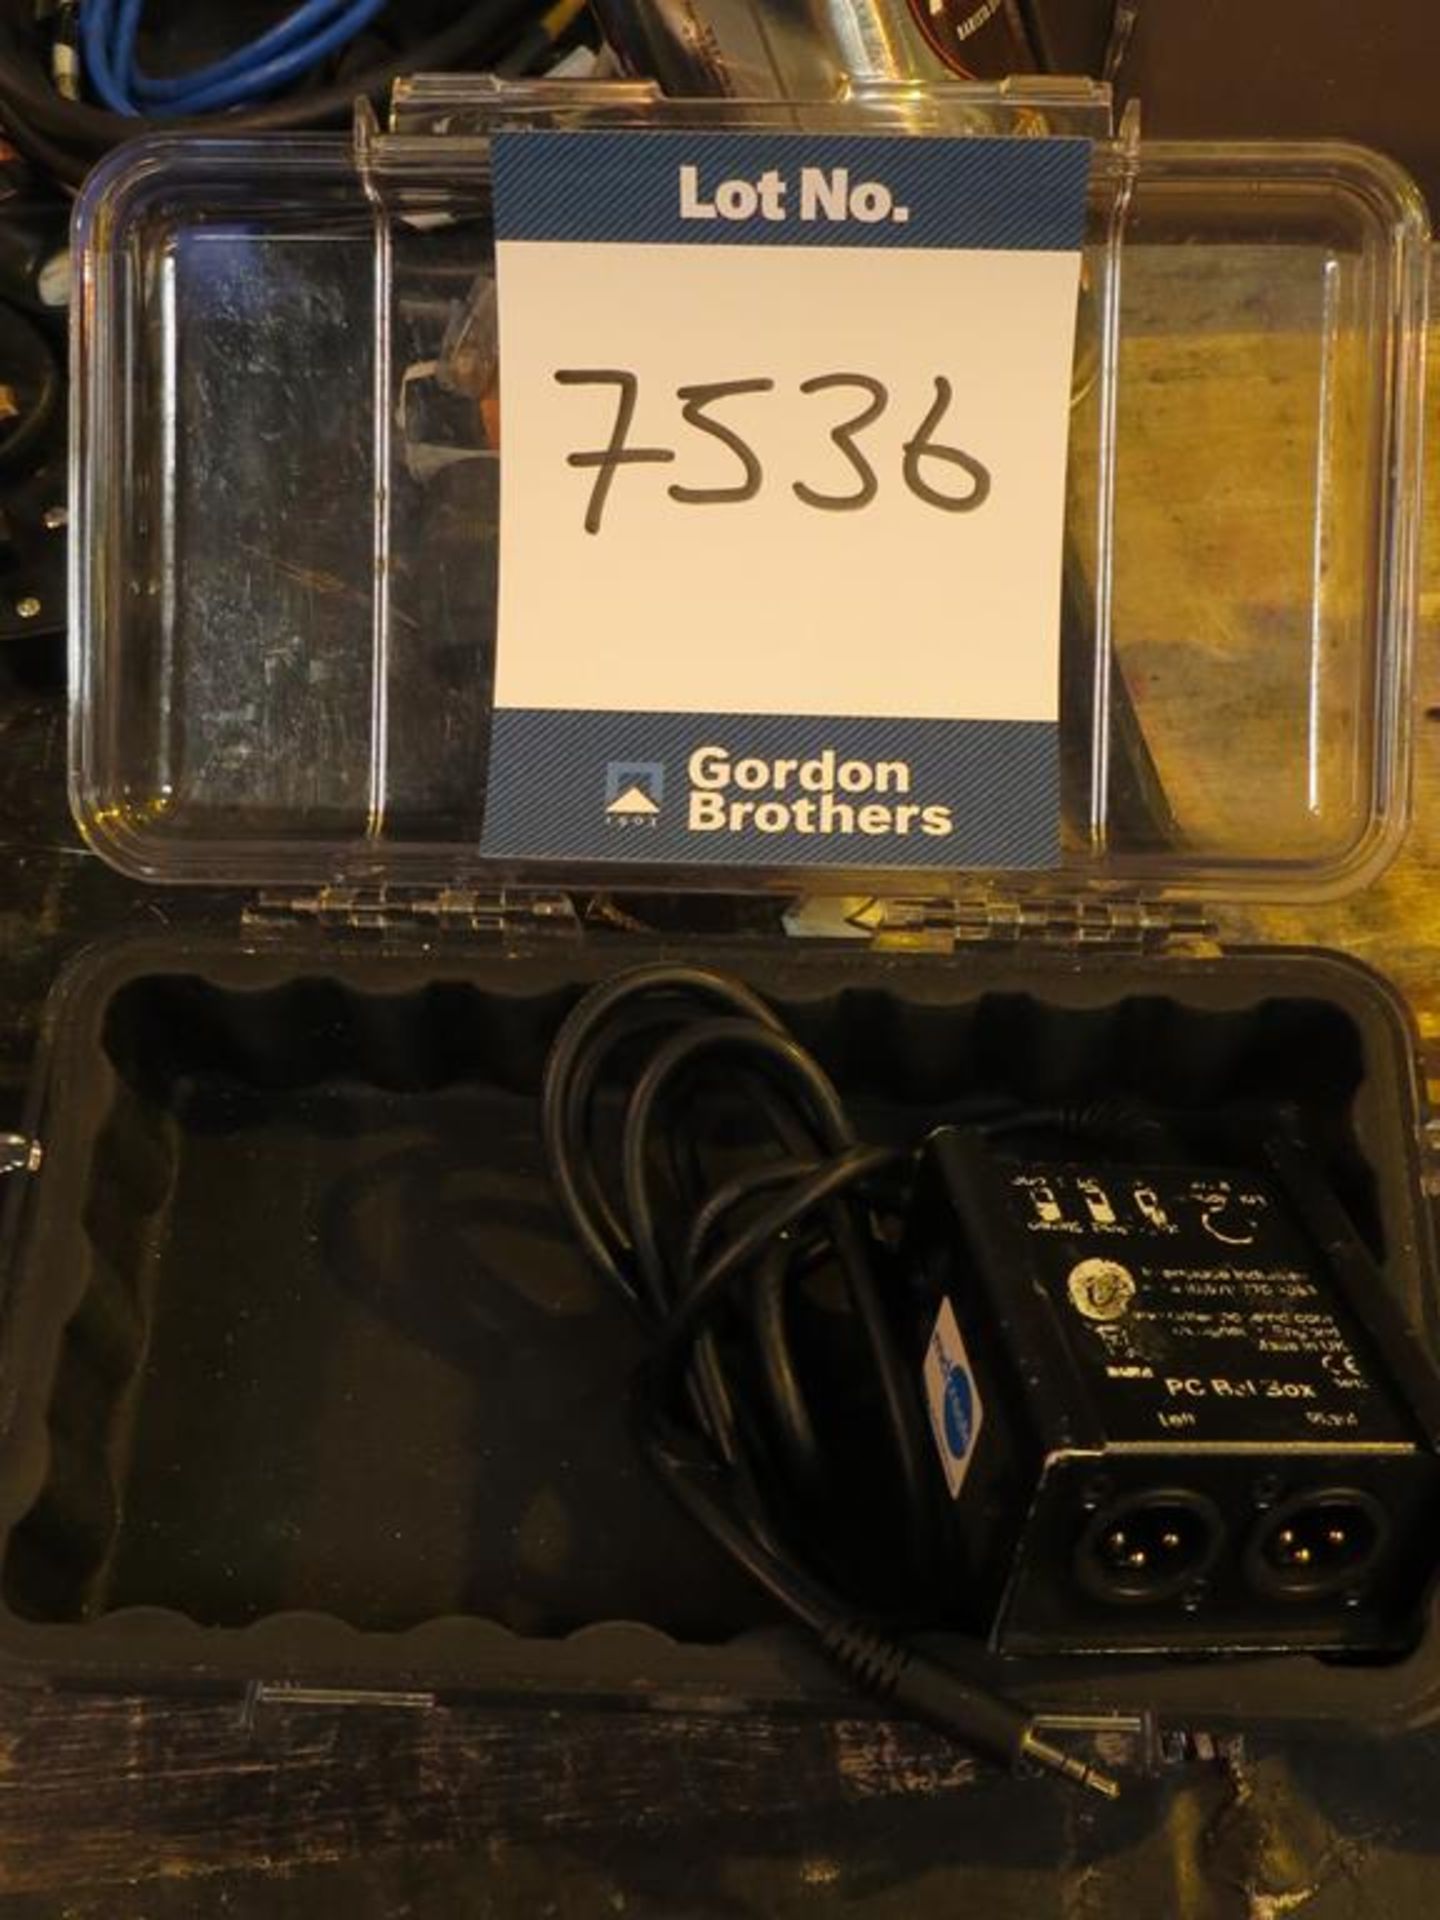 Hive, PC audio balancing box, 3.5mm jack with Peli case: Unit C Moorside, 40 Dava Street, Glasgow